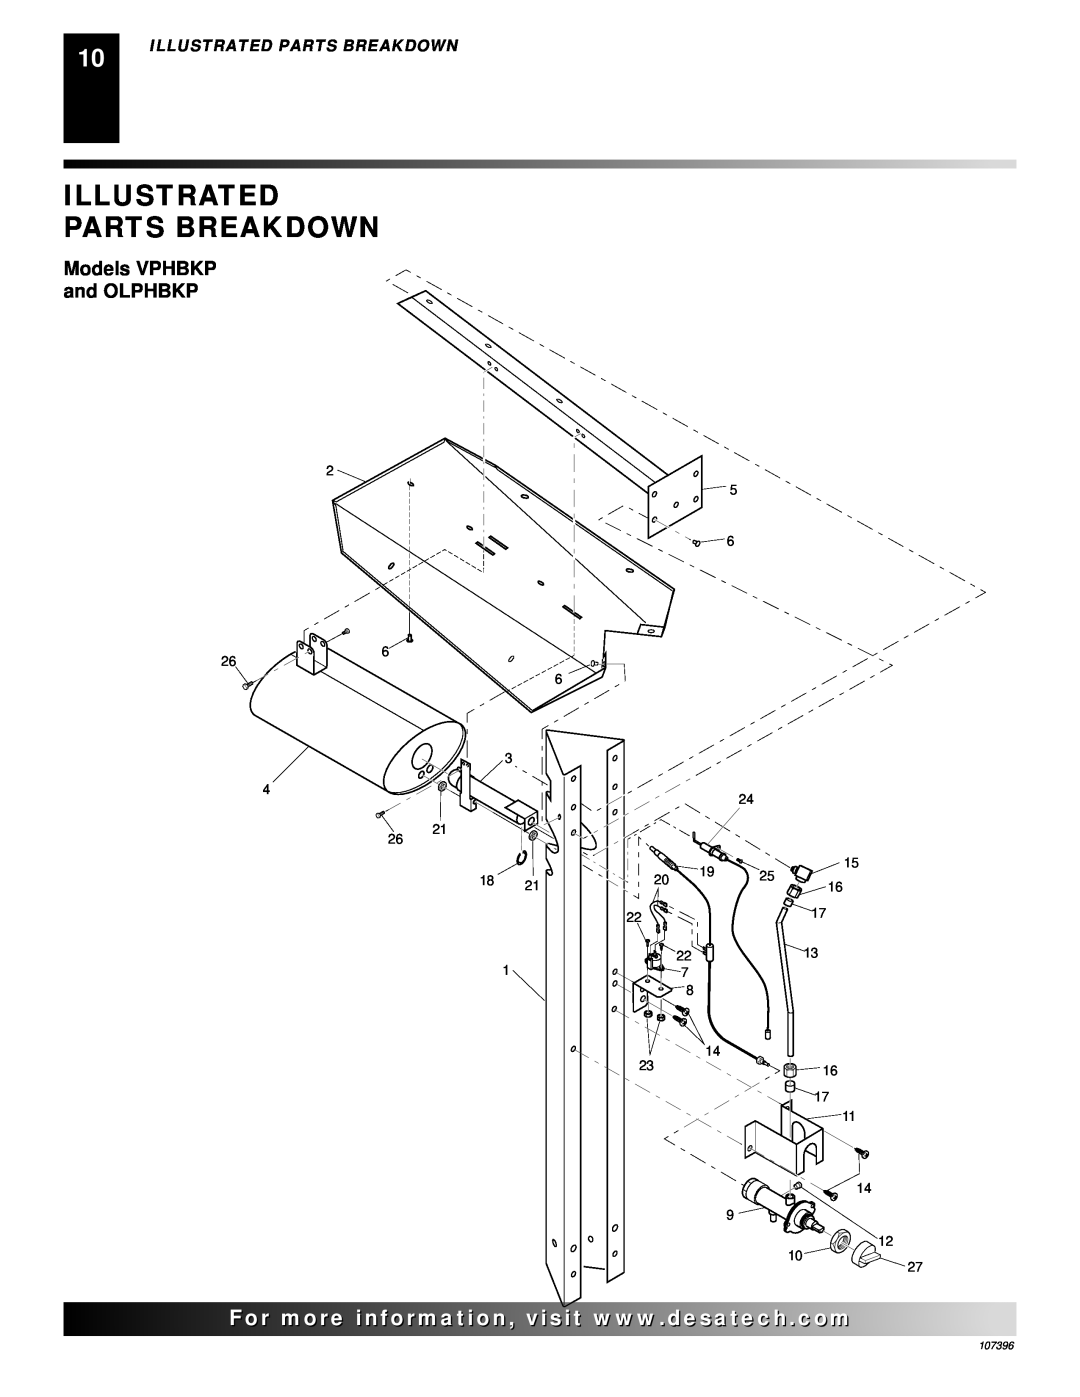 Desa 28BN installation manual Illustrated Parts Breakdown, For..com, Models VPHBKP and OLPHBKP, 107396 